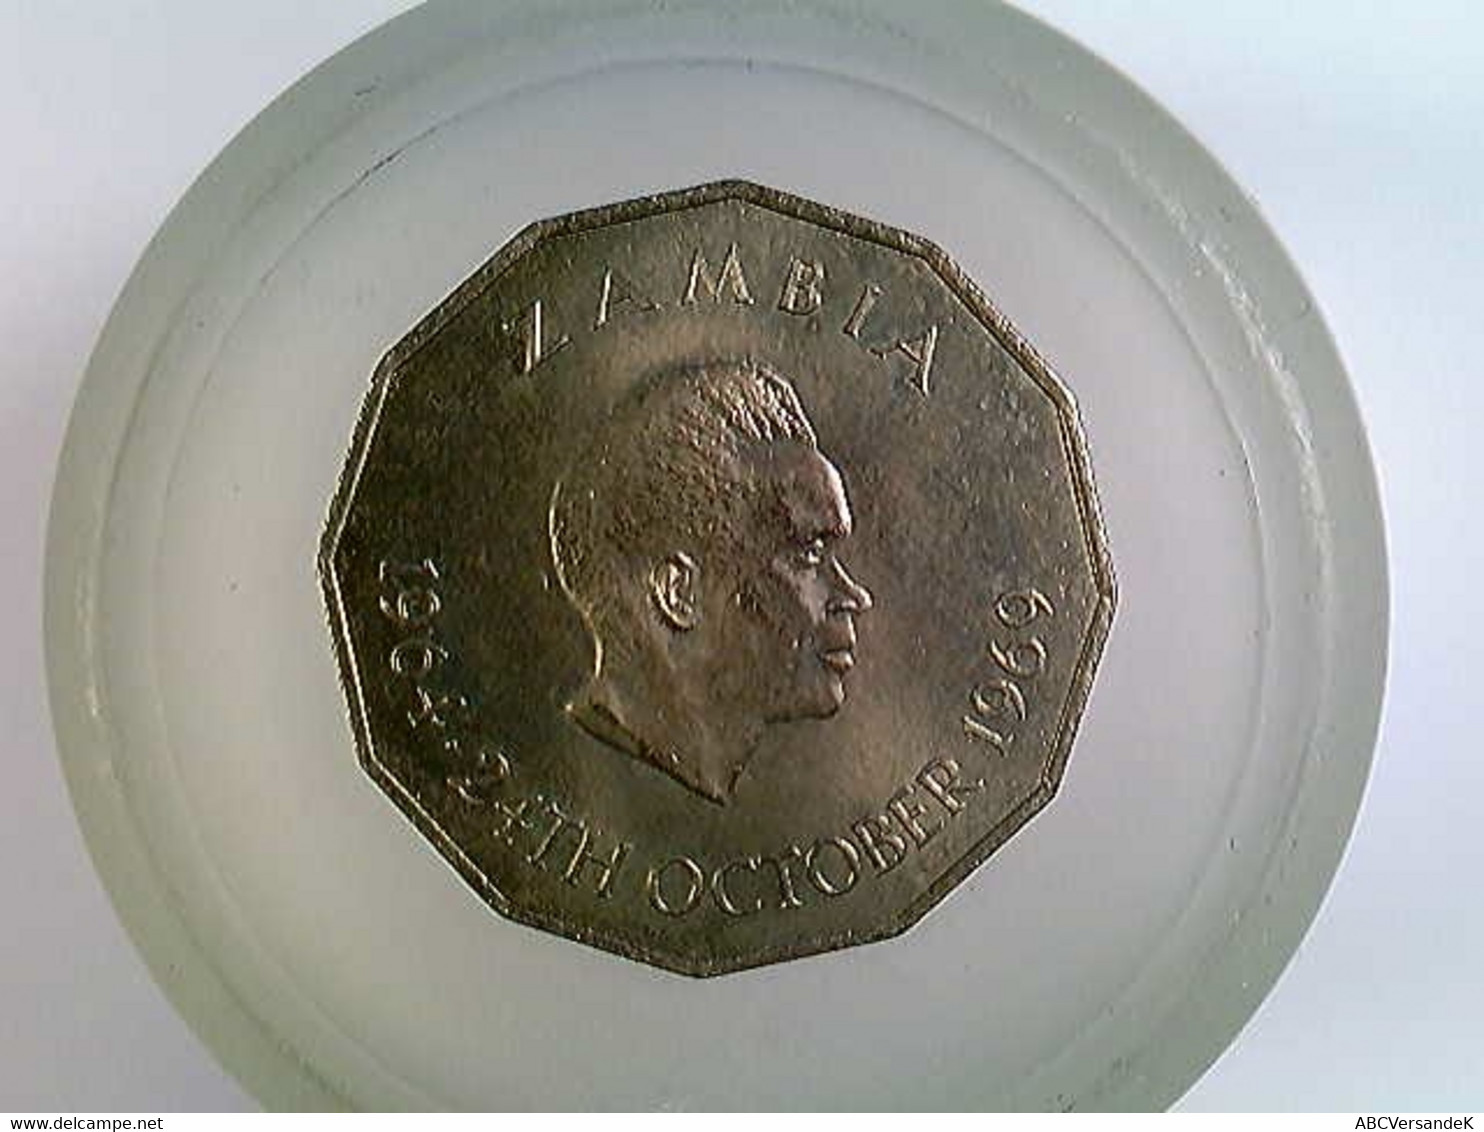 Münze Zambia, 50 Ngwee 1969, FAO, TOP - Numismatica